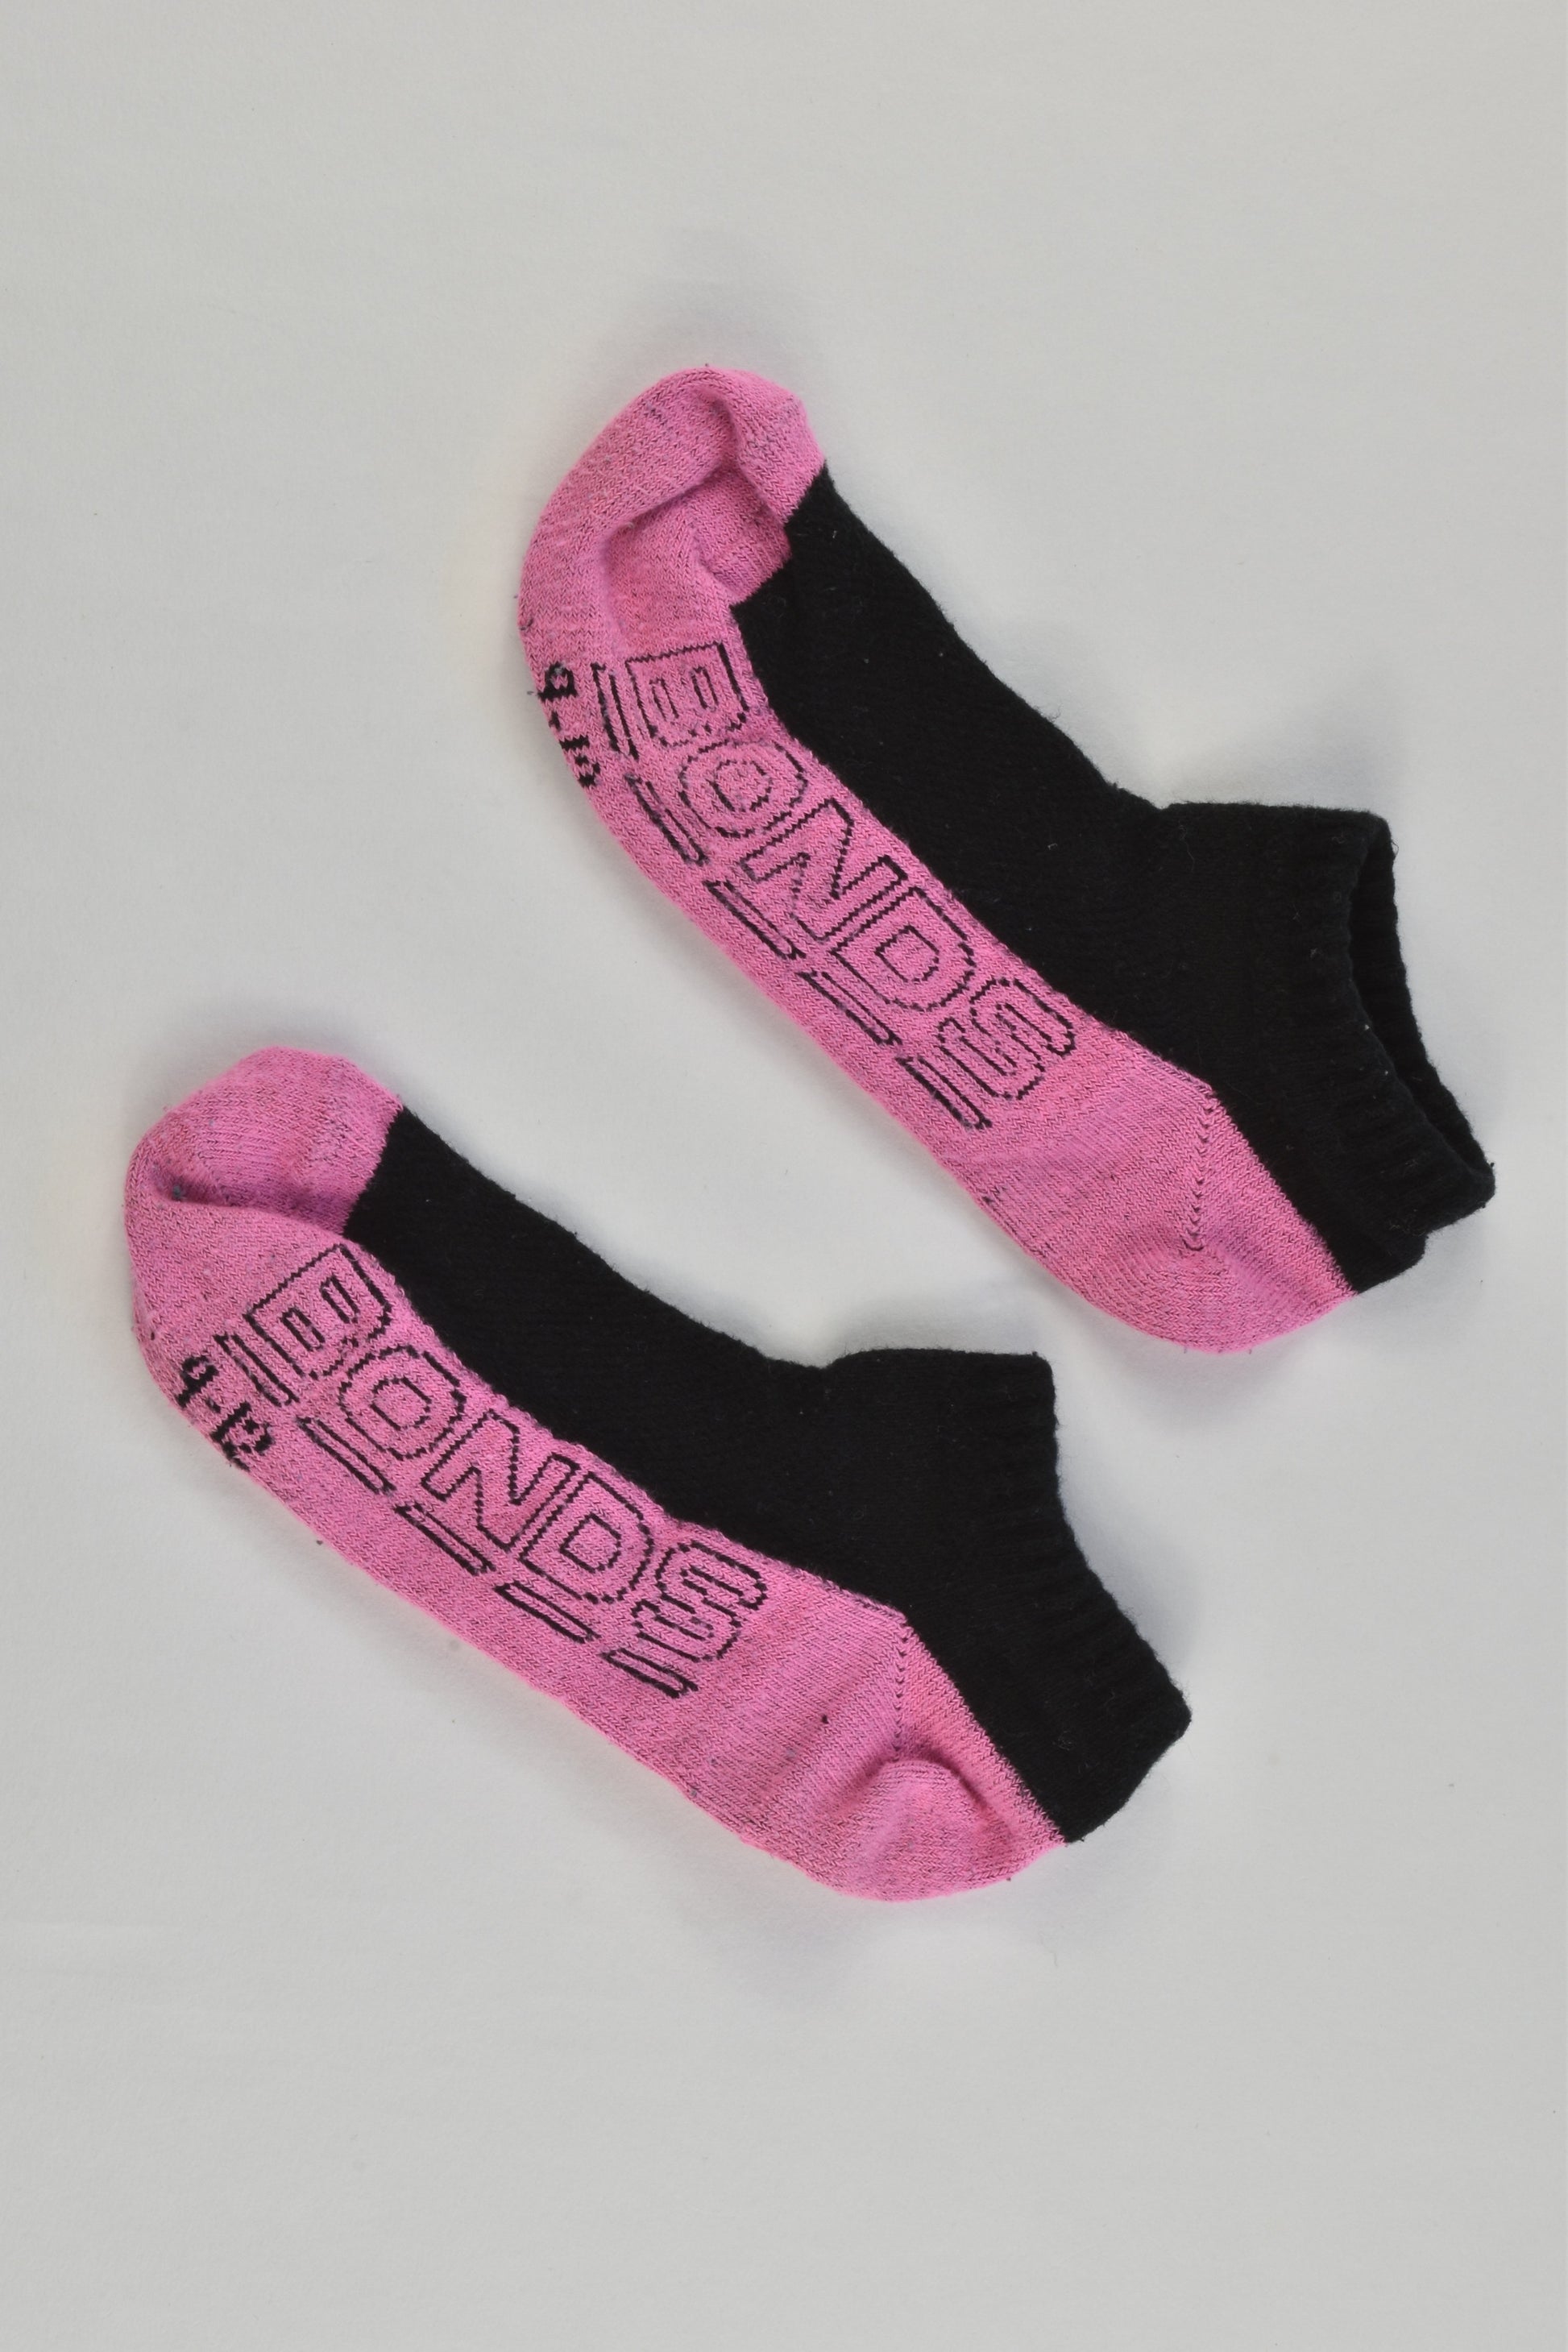 Bonds Size 9-12 (5-7 years) Socks